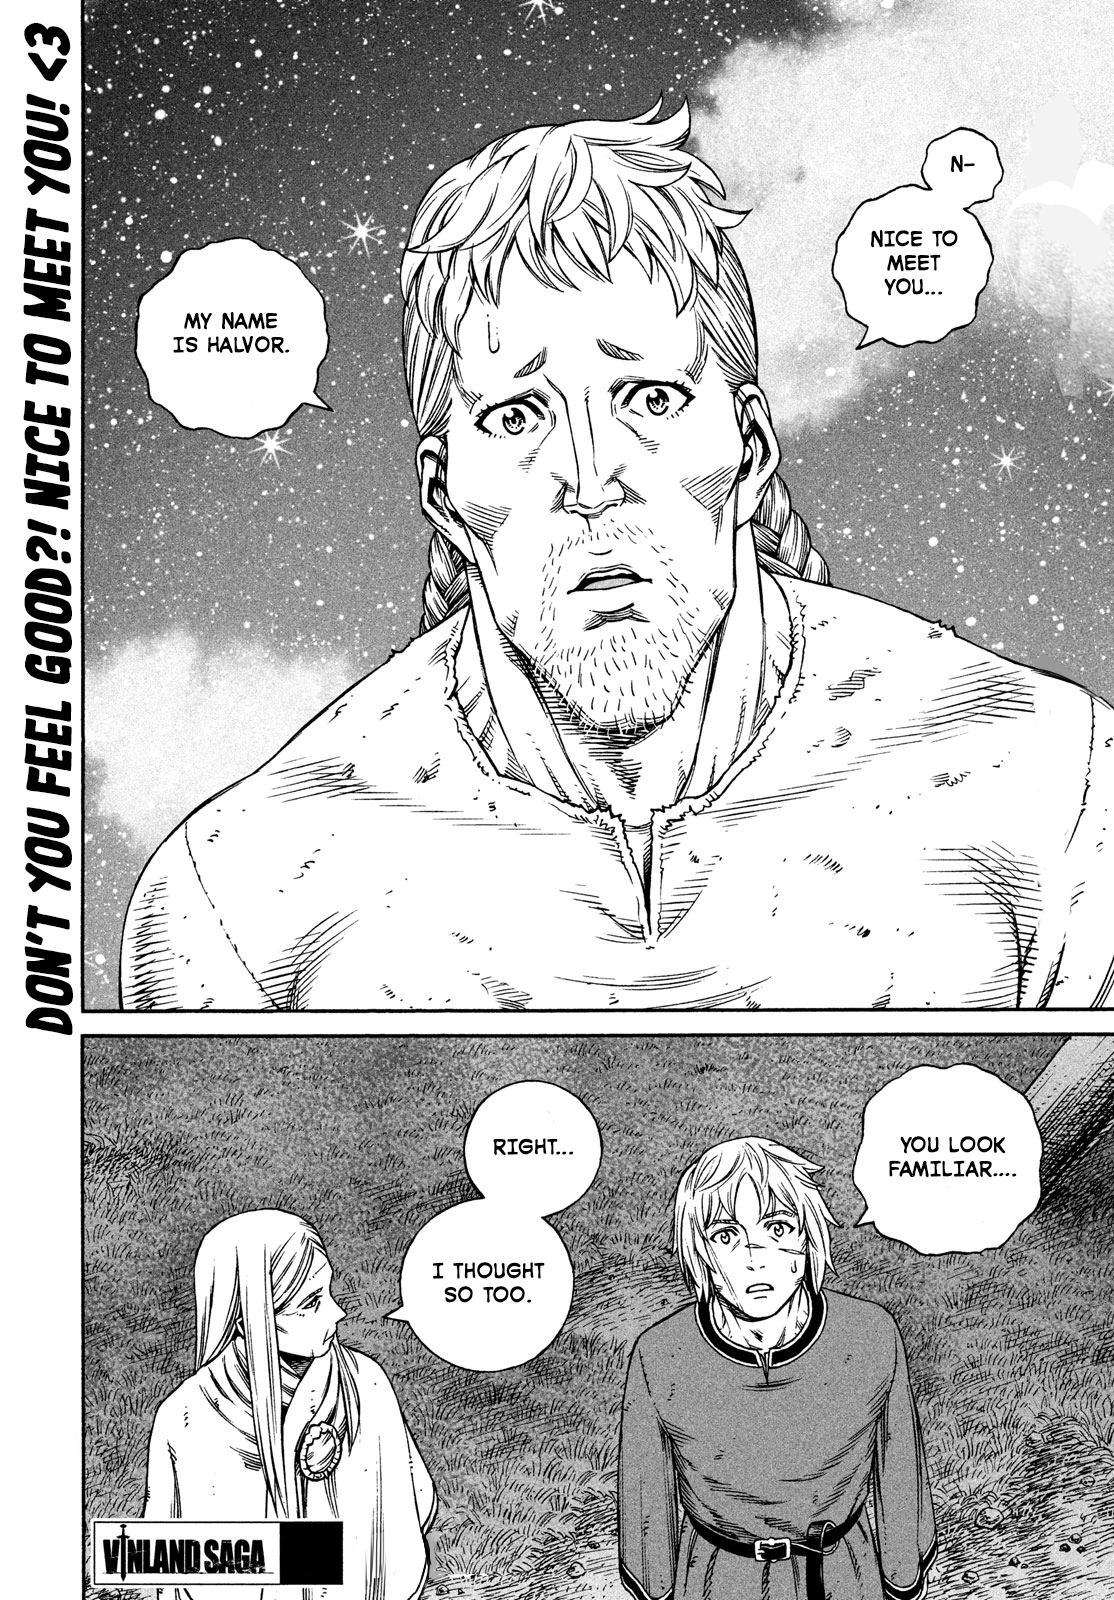 Vinland Saga Manga Manga Chapter - 168 - image 23